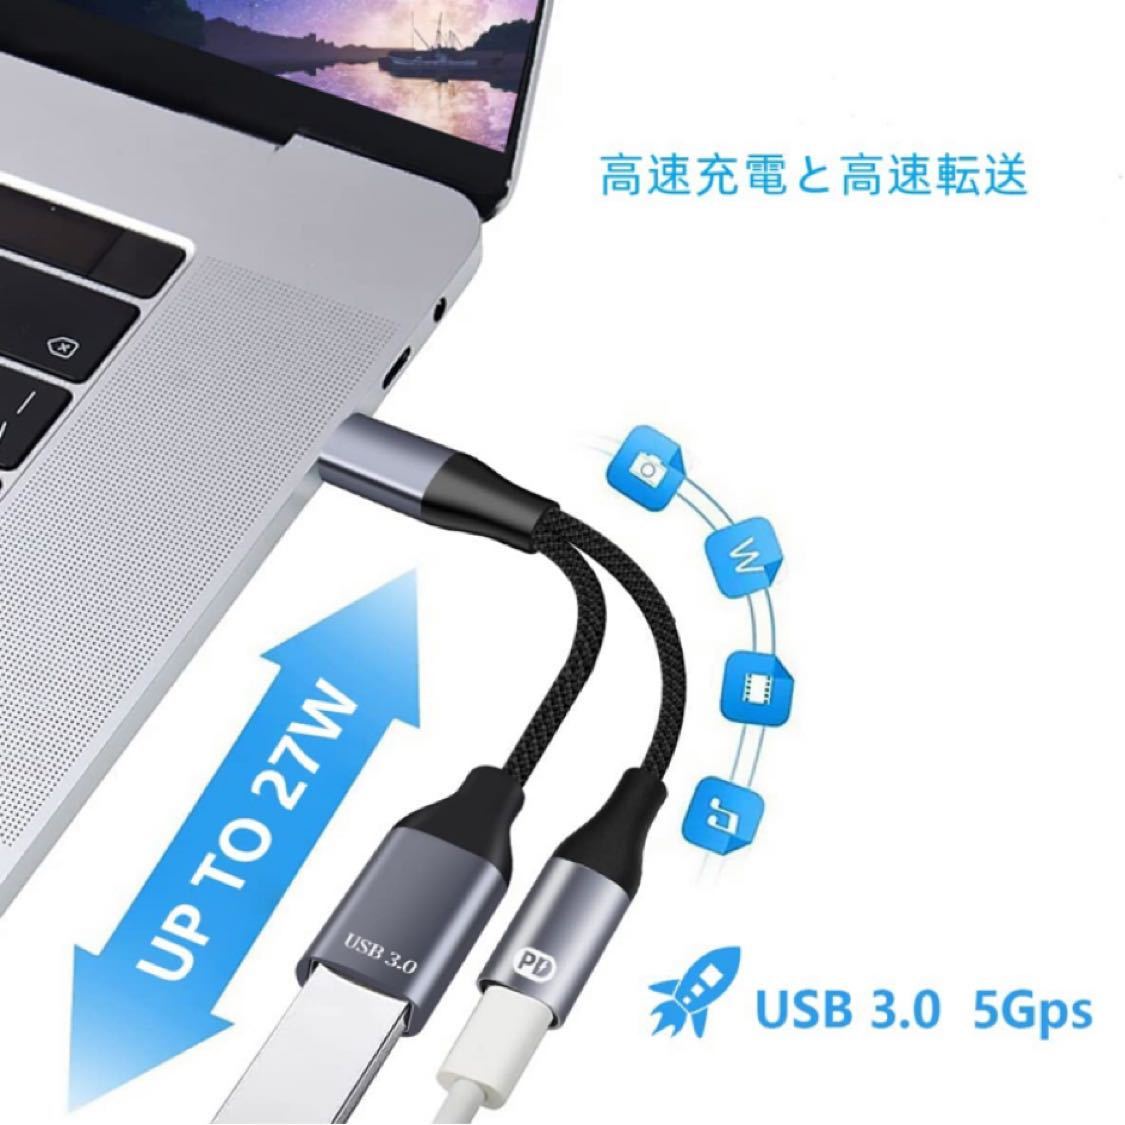 USB C 変換 アダプタ2In1 USB Type Cカメラアダプター (Type C - USB 3.0 メス) PD急速充電 USB変換 OTG機能(グレー)